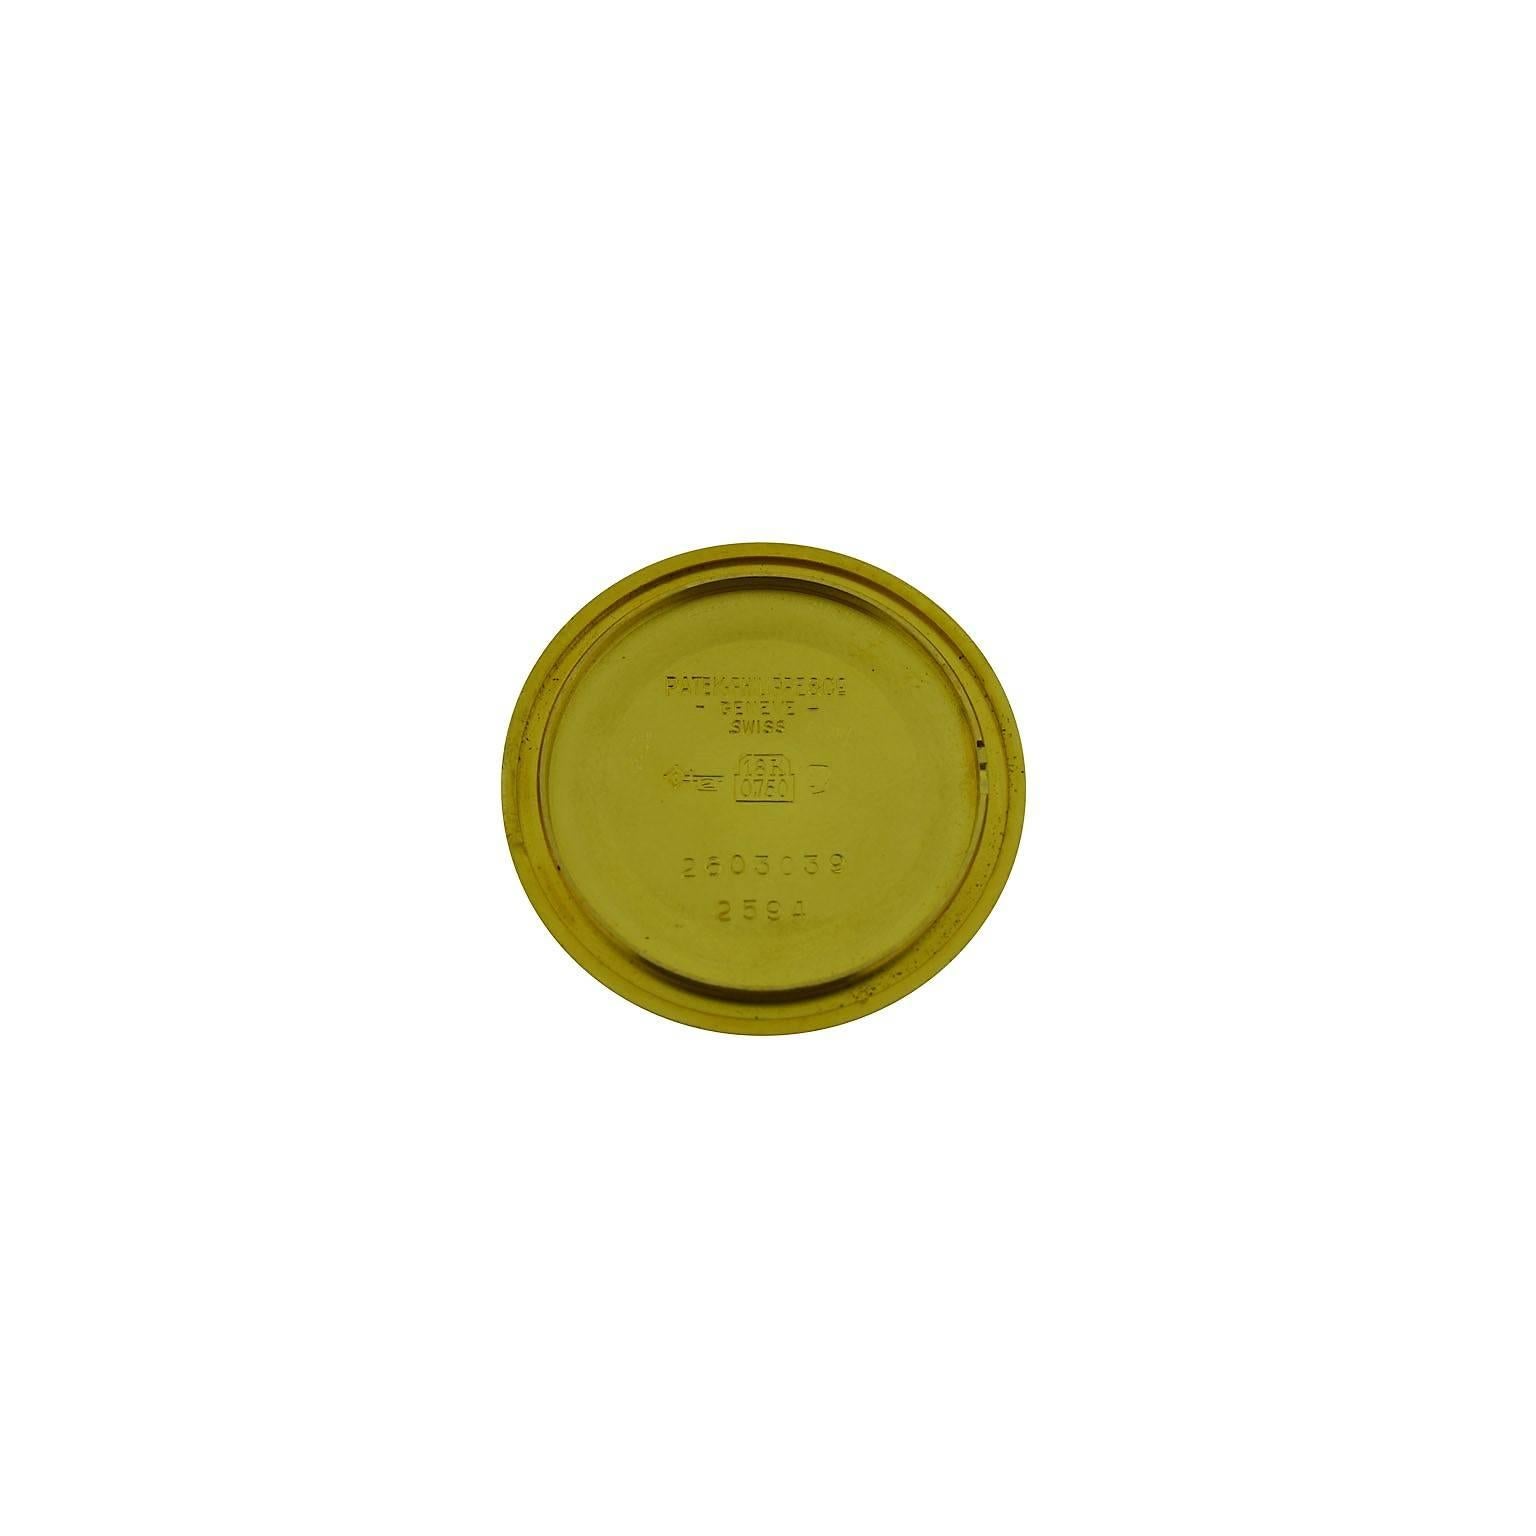 Patek Philippe Yellow Gold Original Florentine Bezel Manual Watch 2